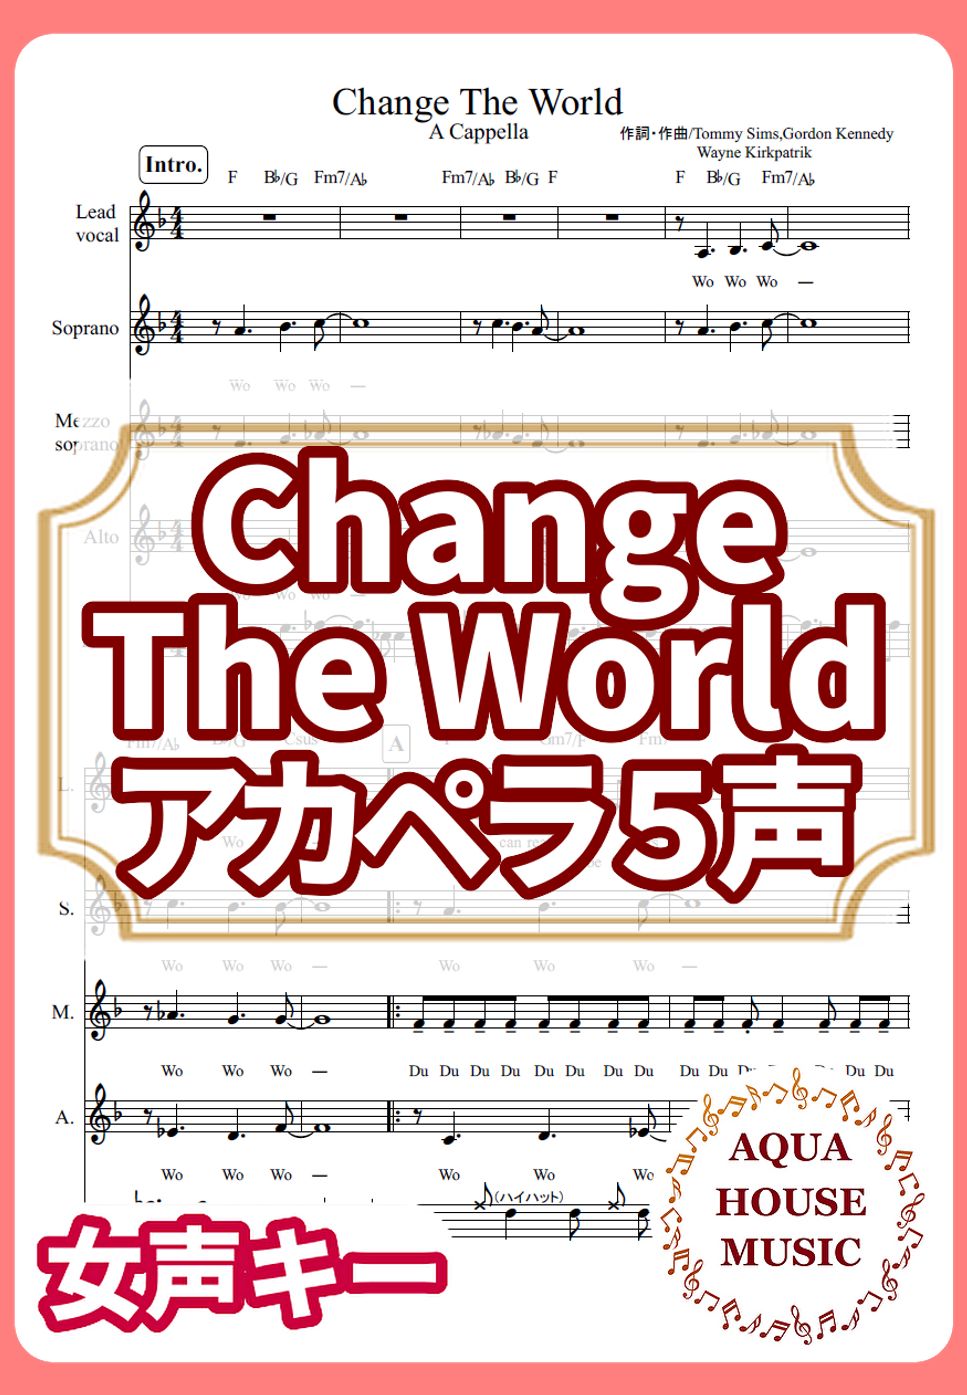 Eric Clapton - Change The World (アカペラ楽譜♪5声ボイパなし) by 飯田 亜紗子